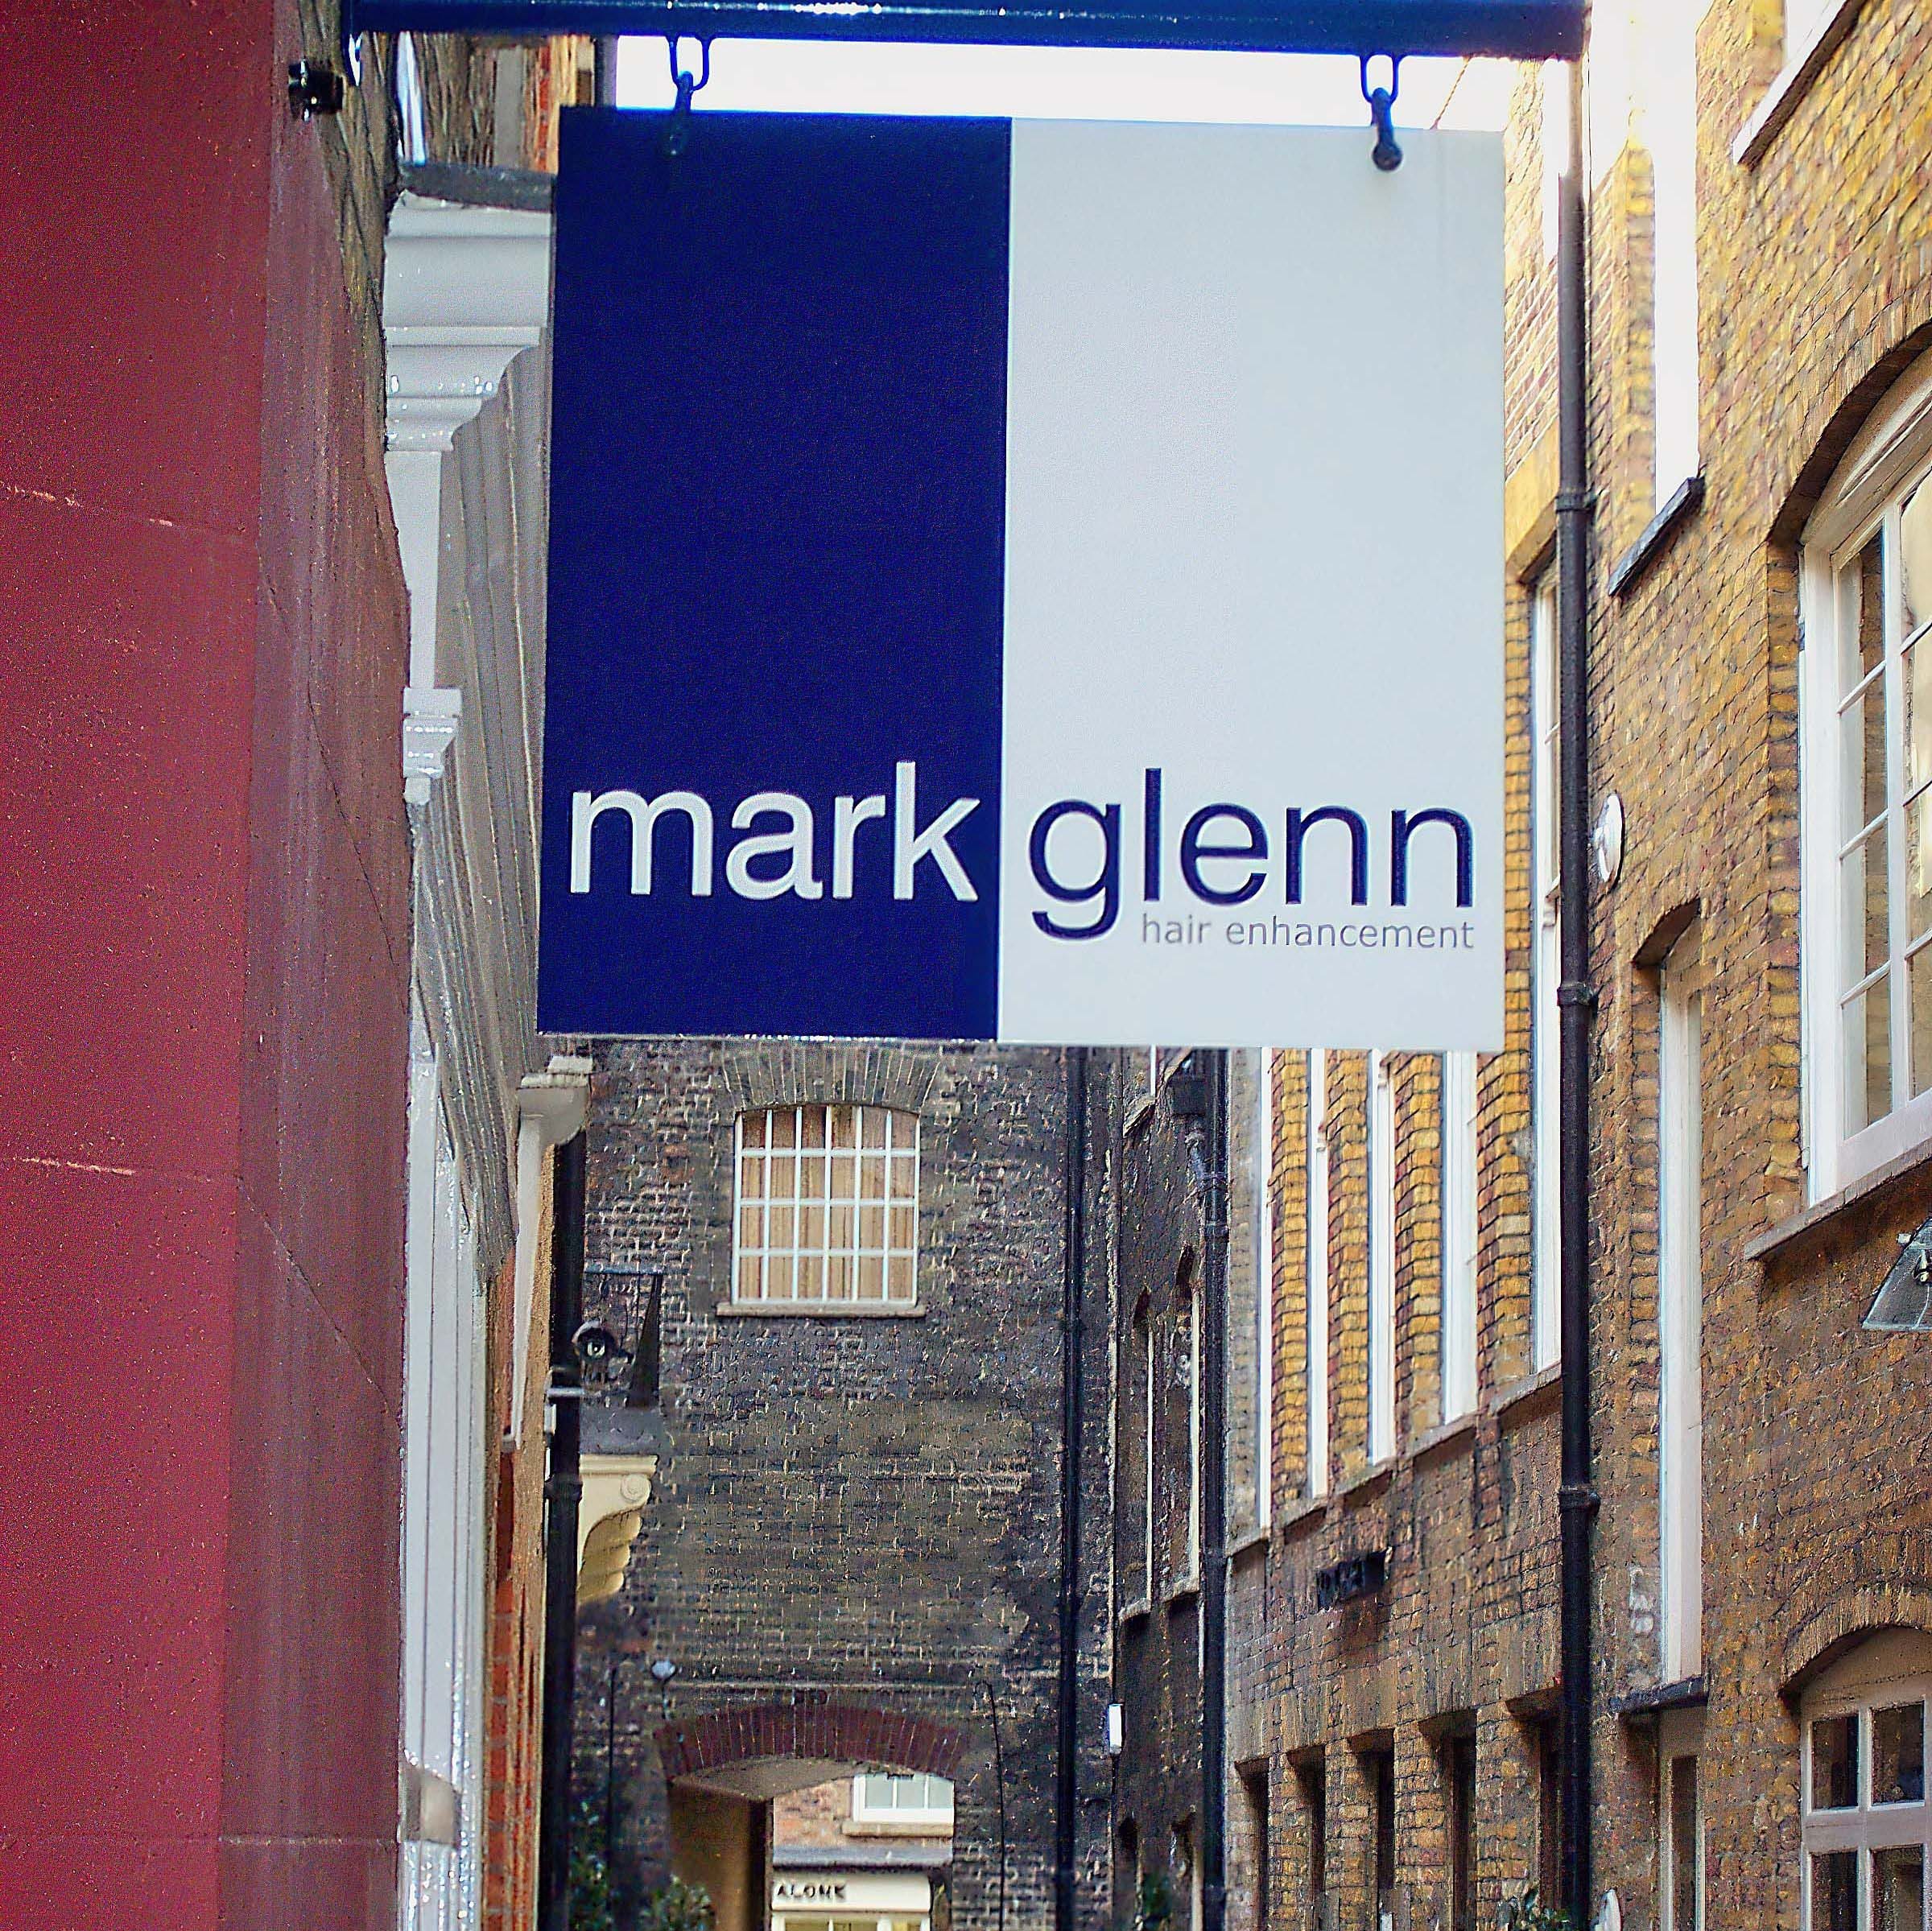 Mark Glenn's first location in Lancashire Court, New Bond St, London - 2001